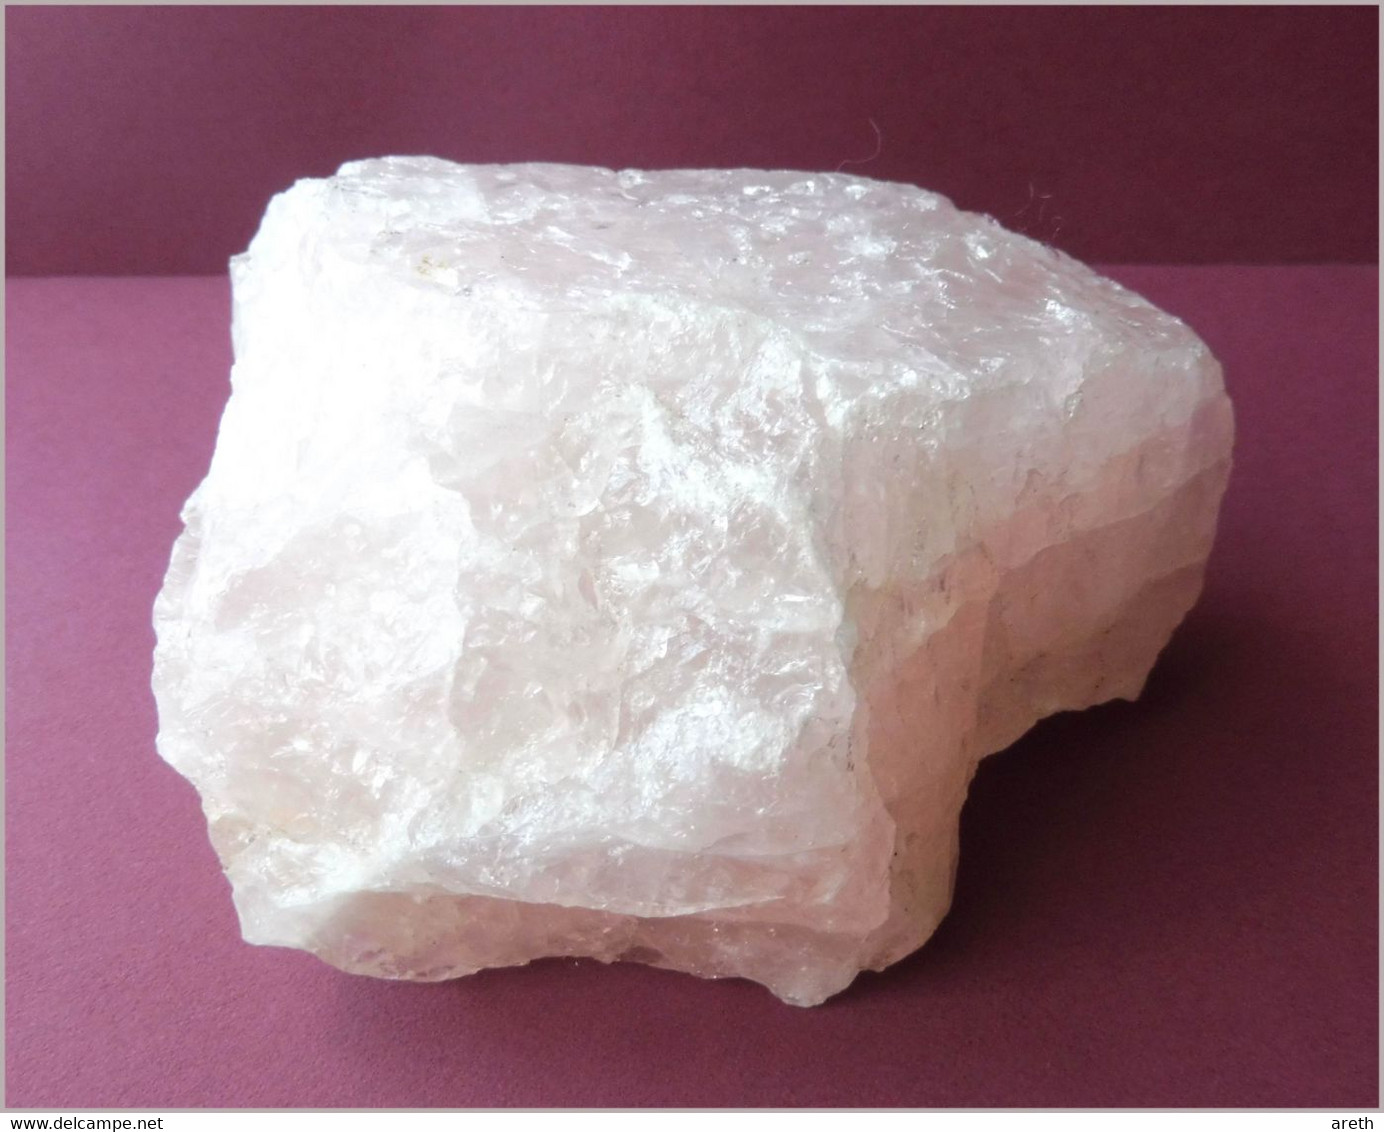 Joli bloc de quartz rose  ~~ 11 x 7 x 5 cm ~~  518 g.